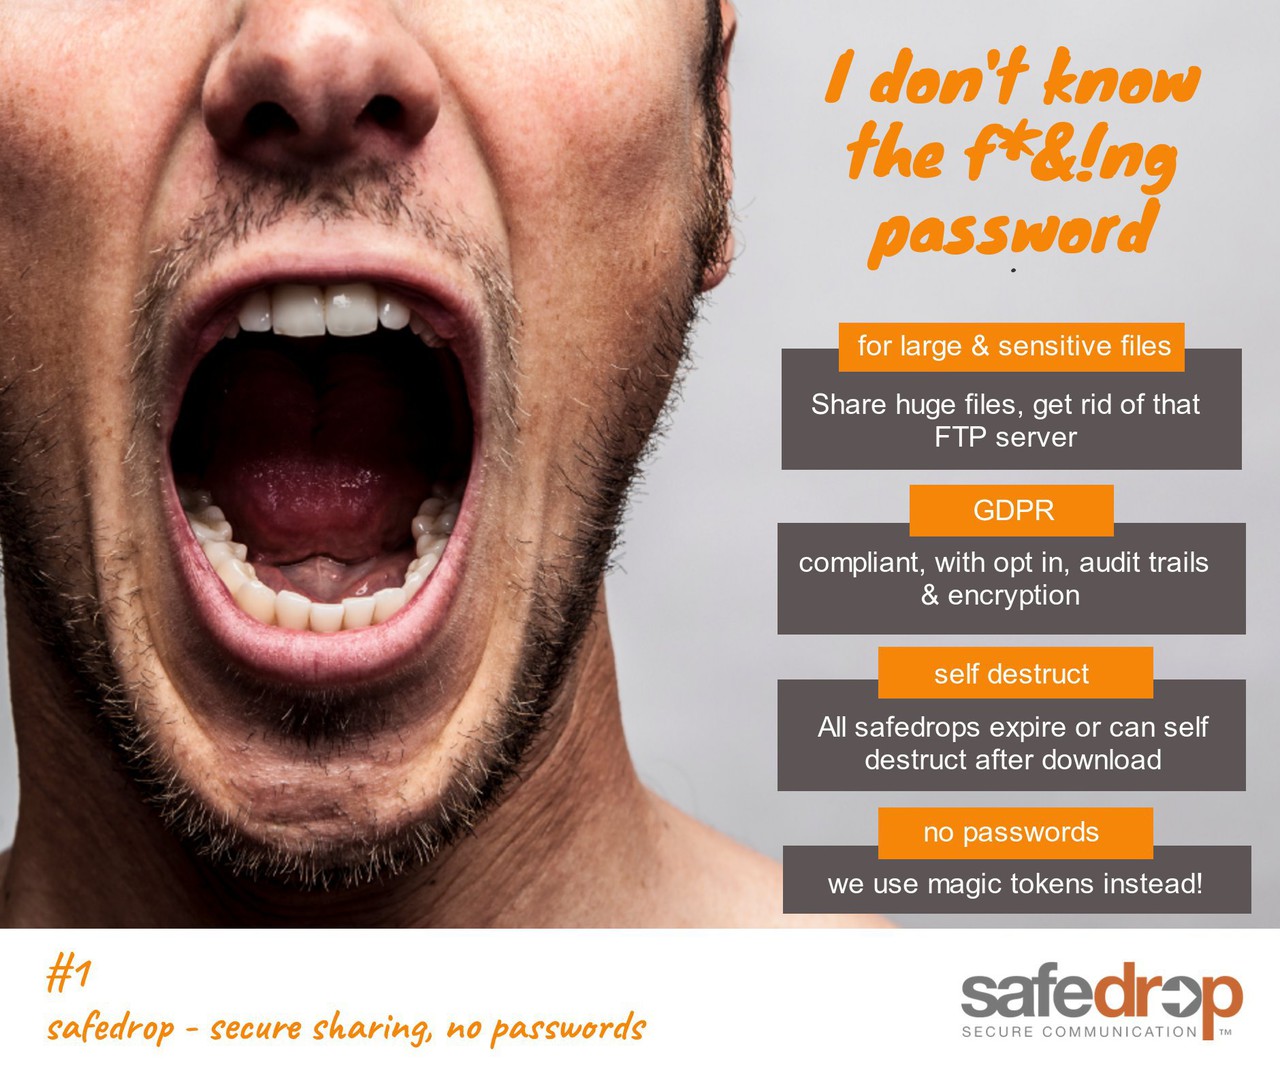 safedrop - no passwords